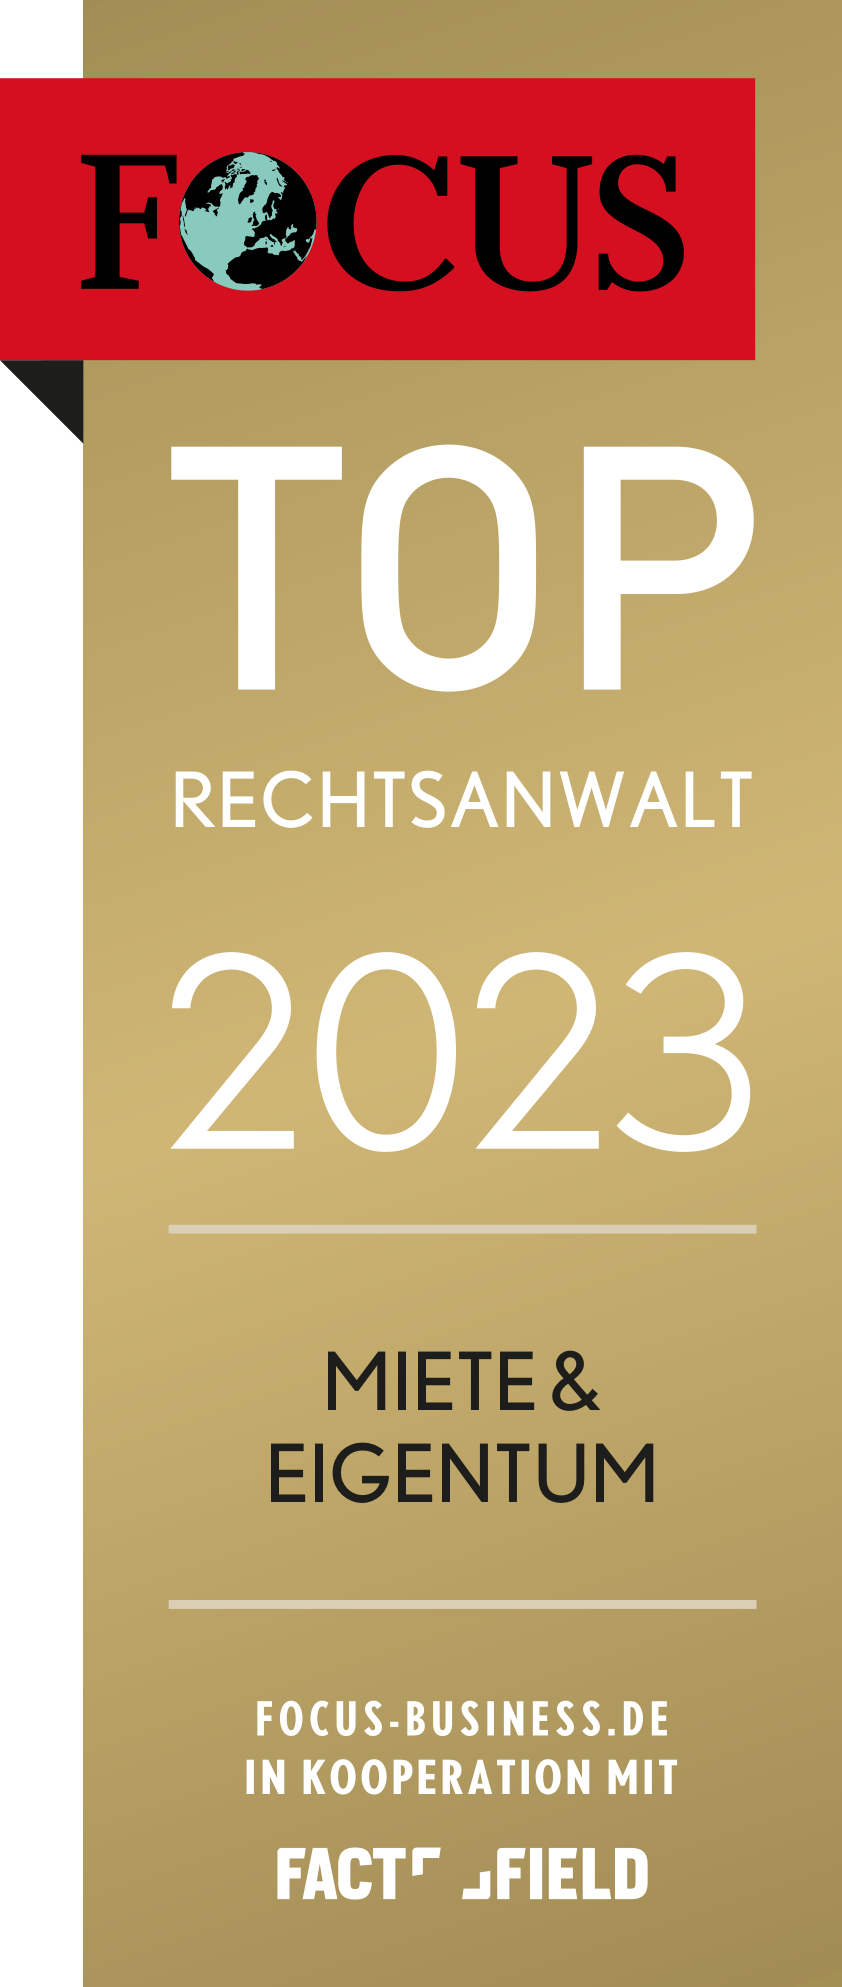 FOCUS-Siegel „TOP Rechtsanwalt 2023 – Miete & Eigentum“ 